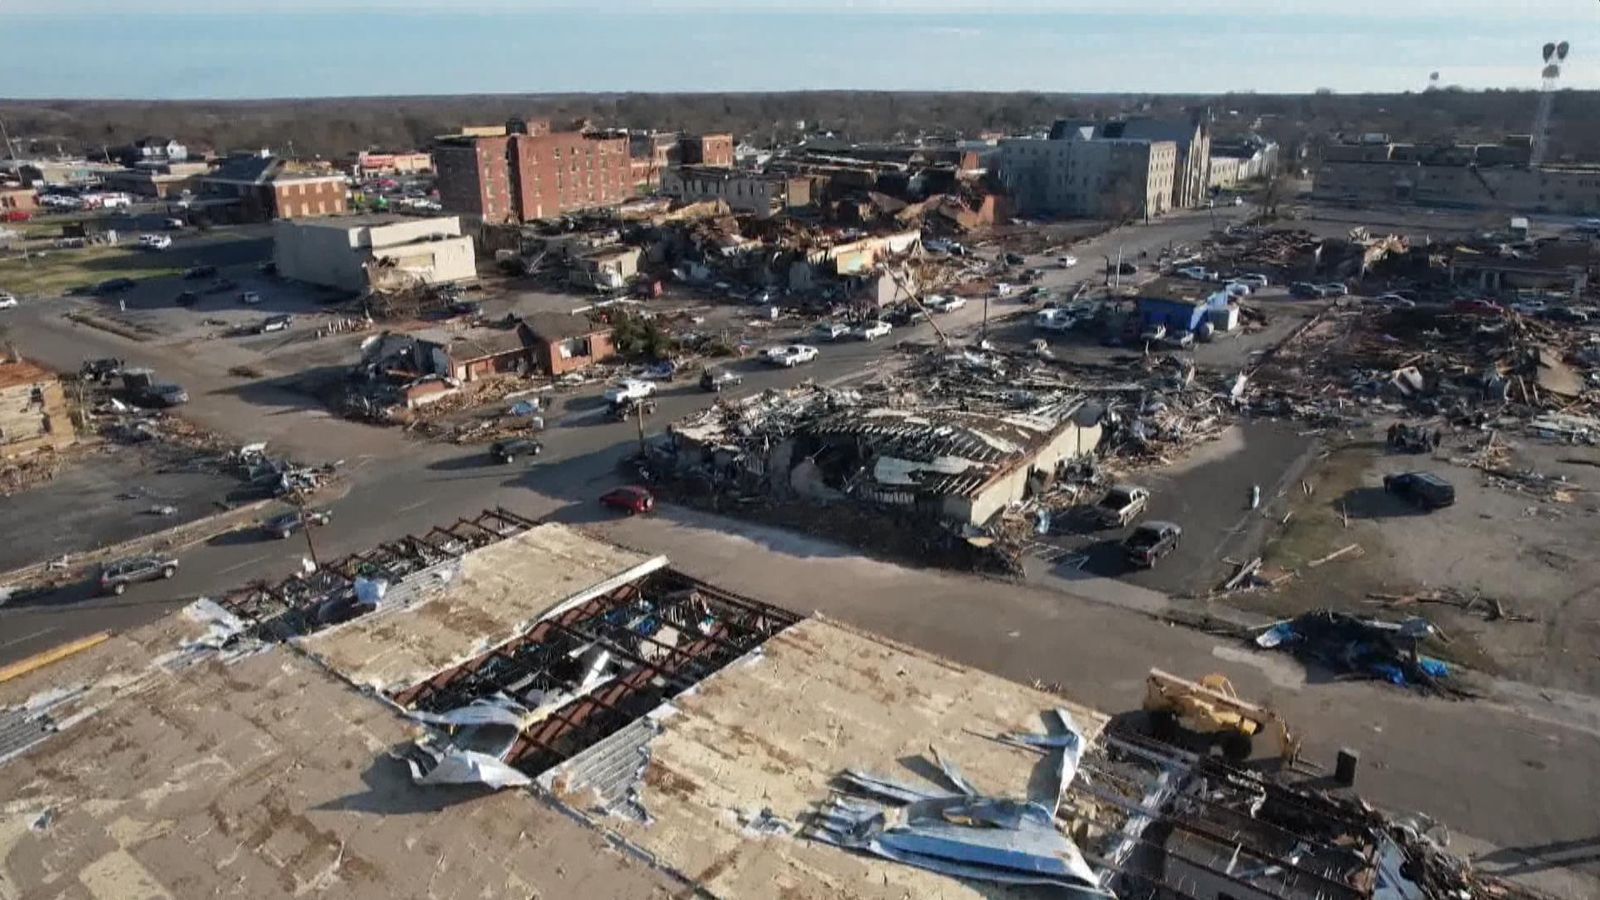 Kentucky Drone footage of mass destruction in Mayfield News UK Video